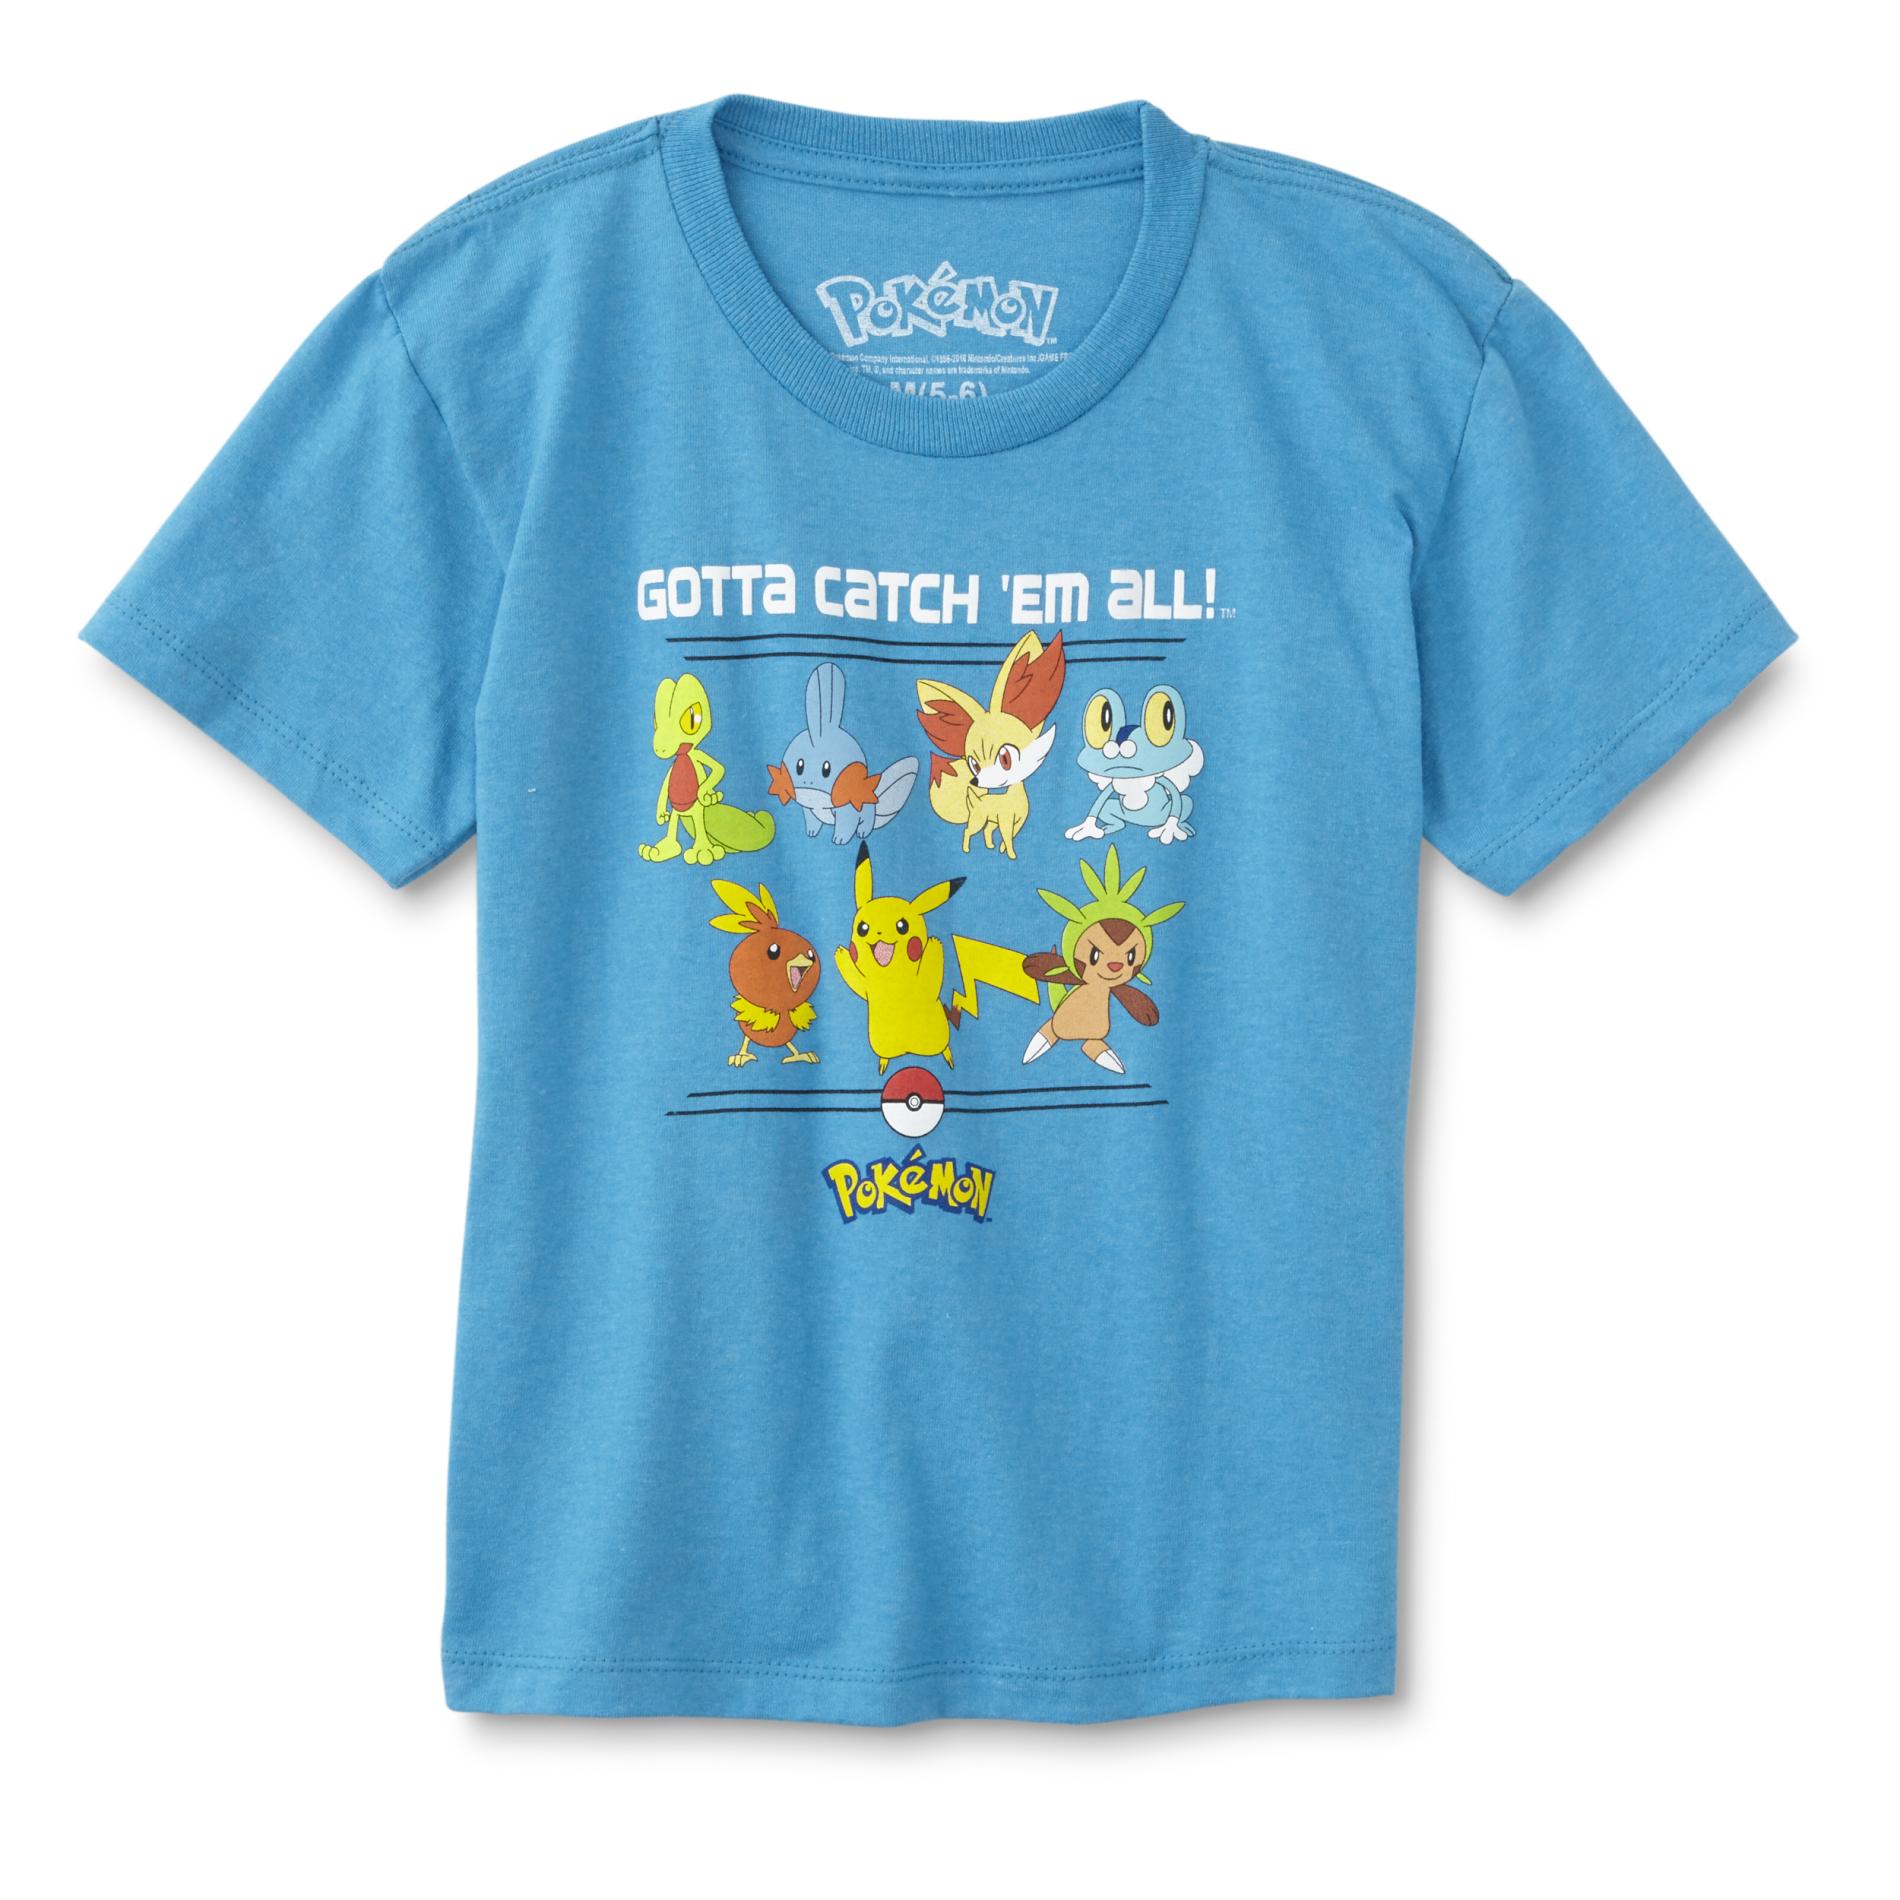 Nintendo Pokemon Boys' Graphic T-Shirt - Gotta Catch 'Em All